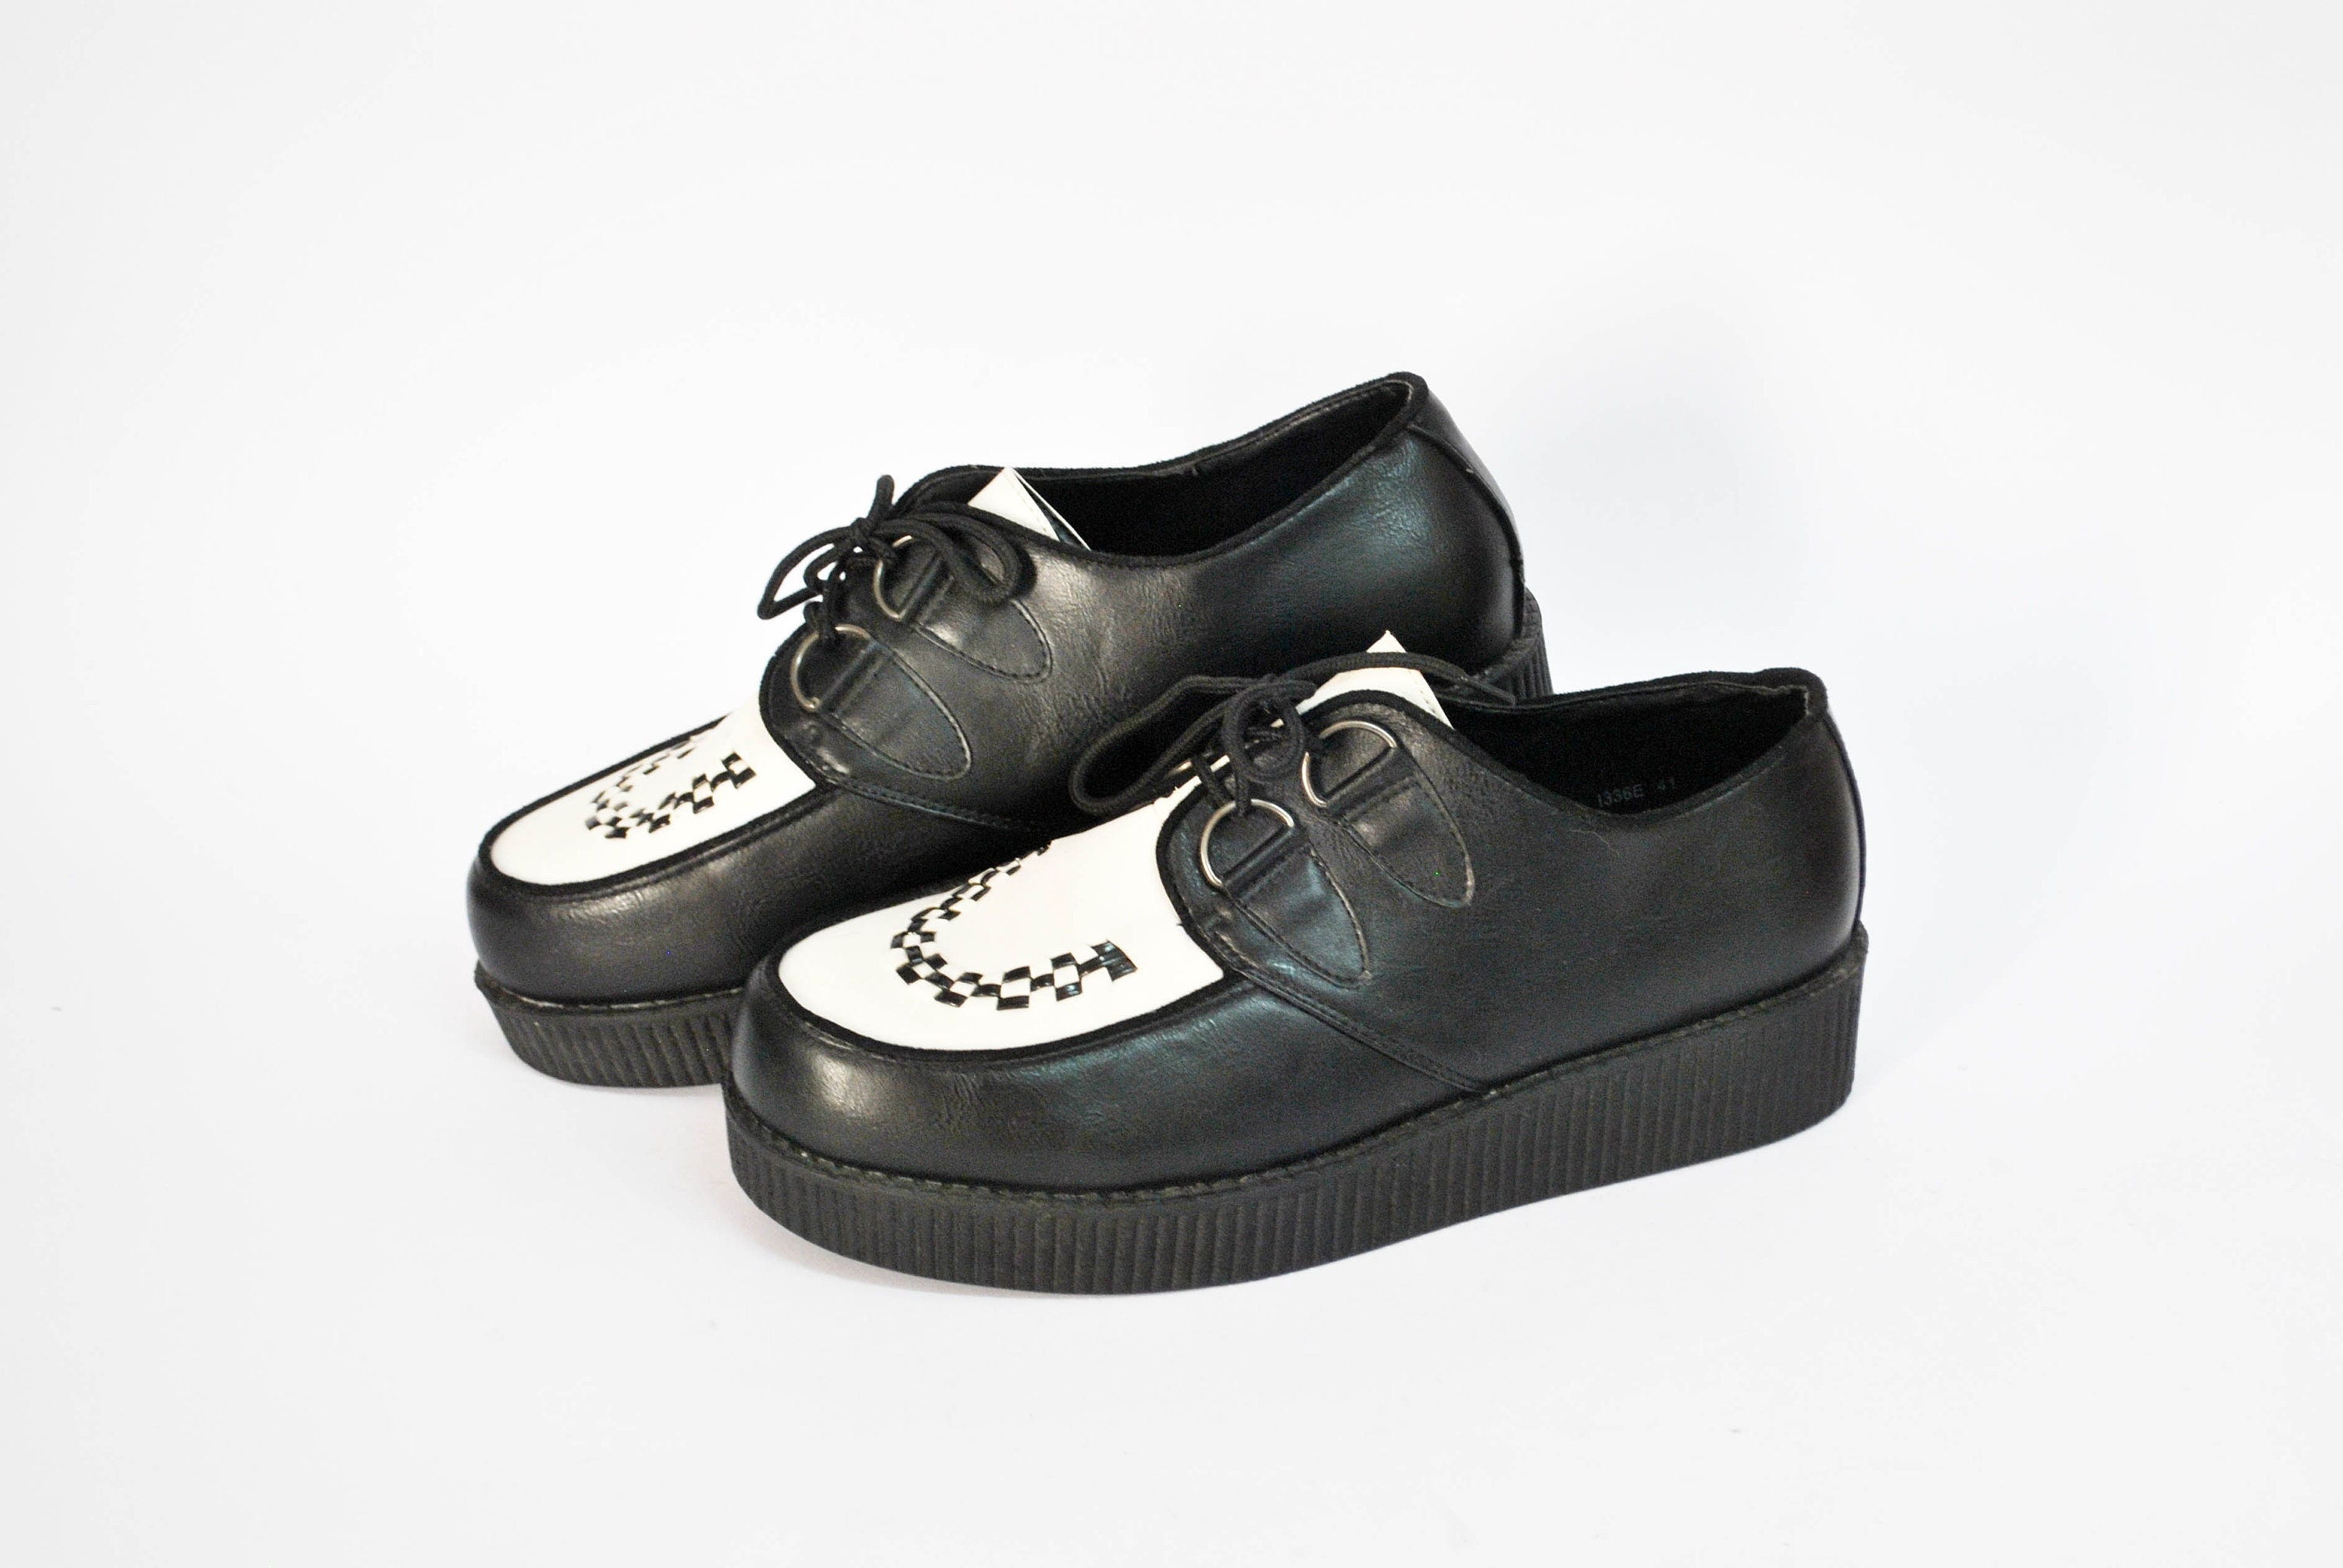 Retro Shoes & Boots - Rockabilly Creepers & Flats - Dark Fashion